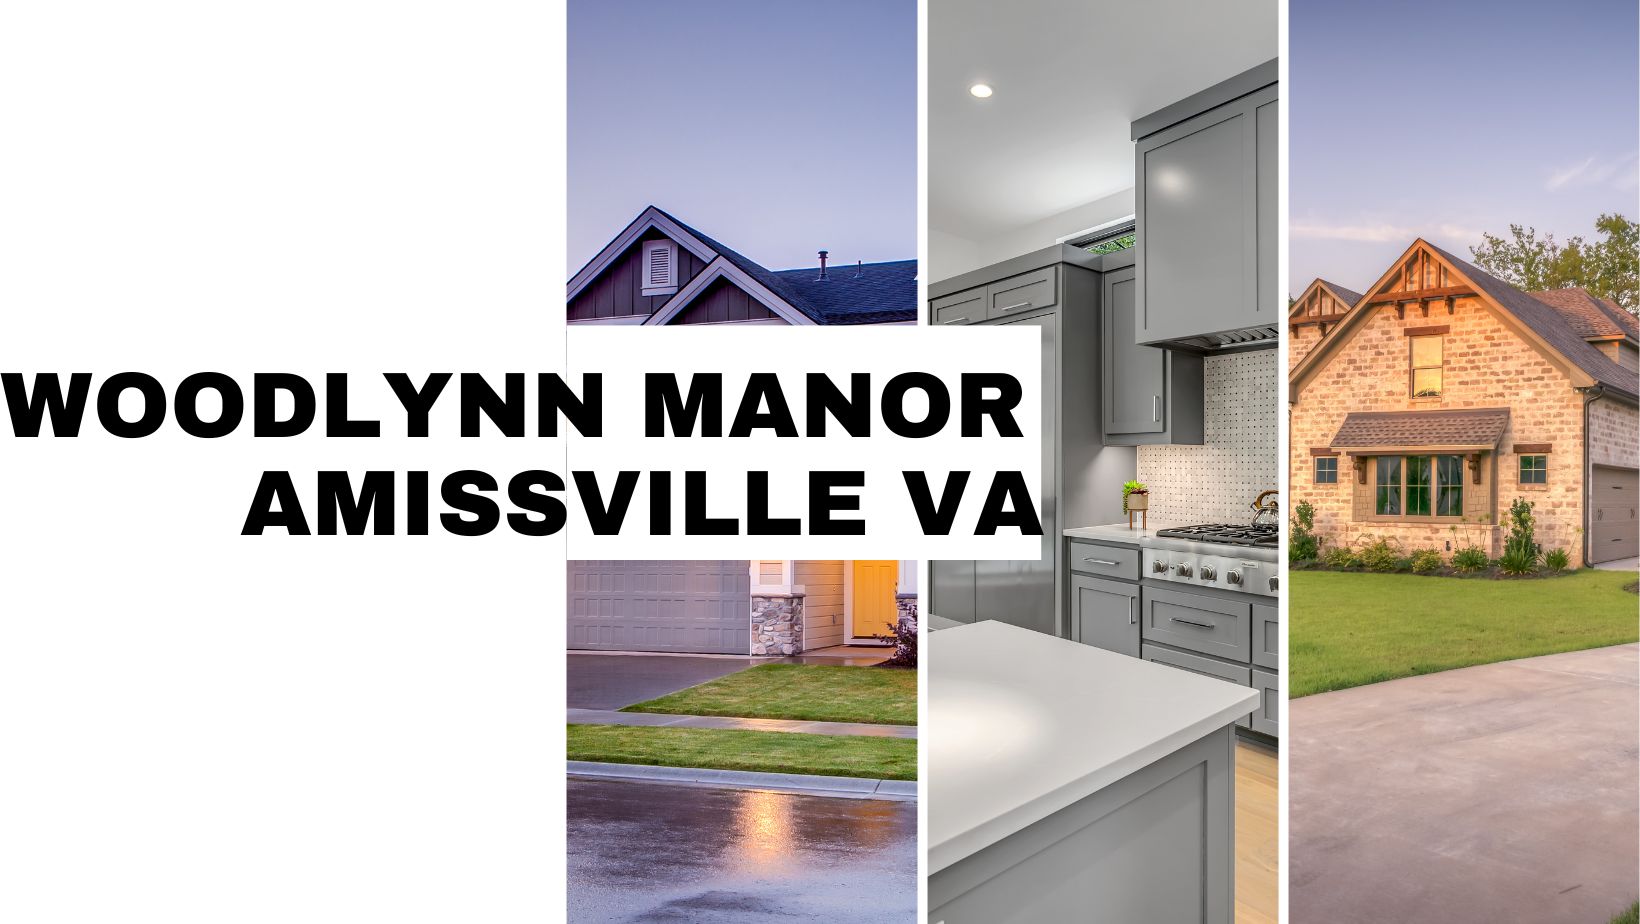 Woodlynn Manor Amissville VA Homes for Sale